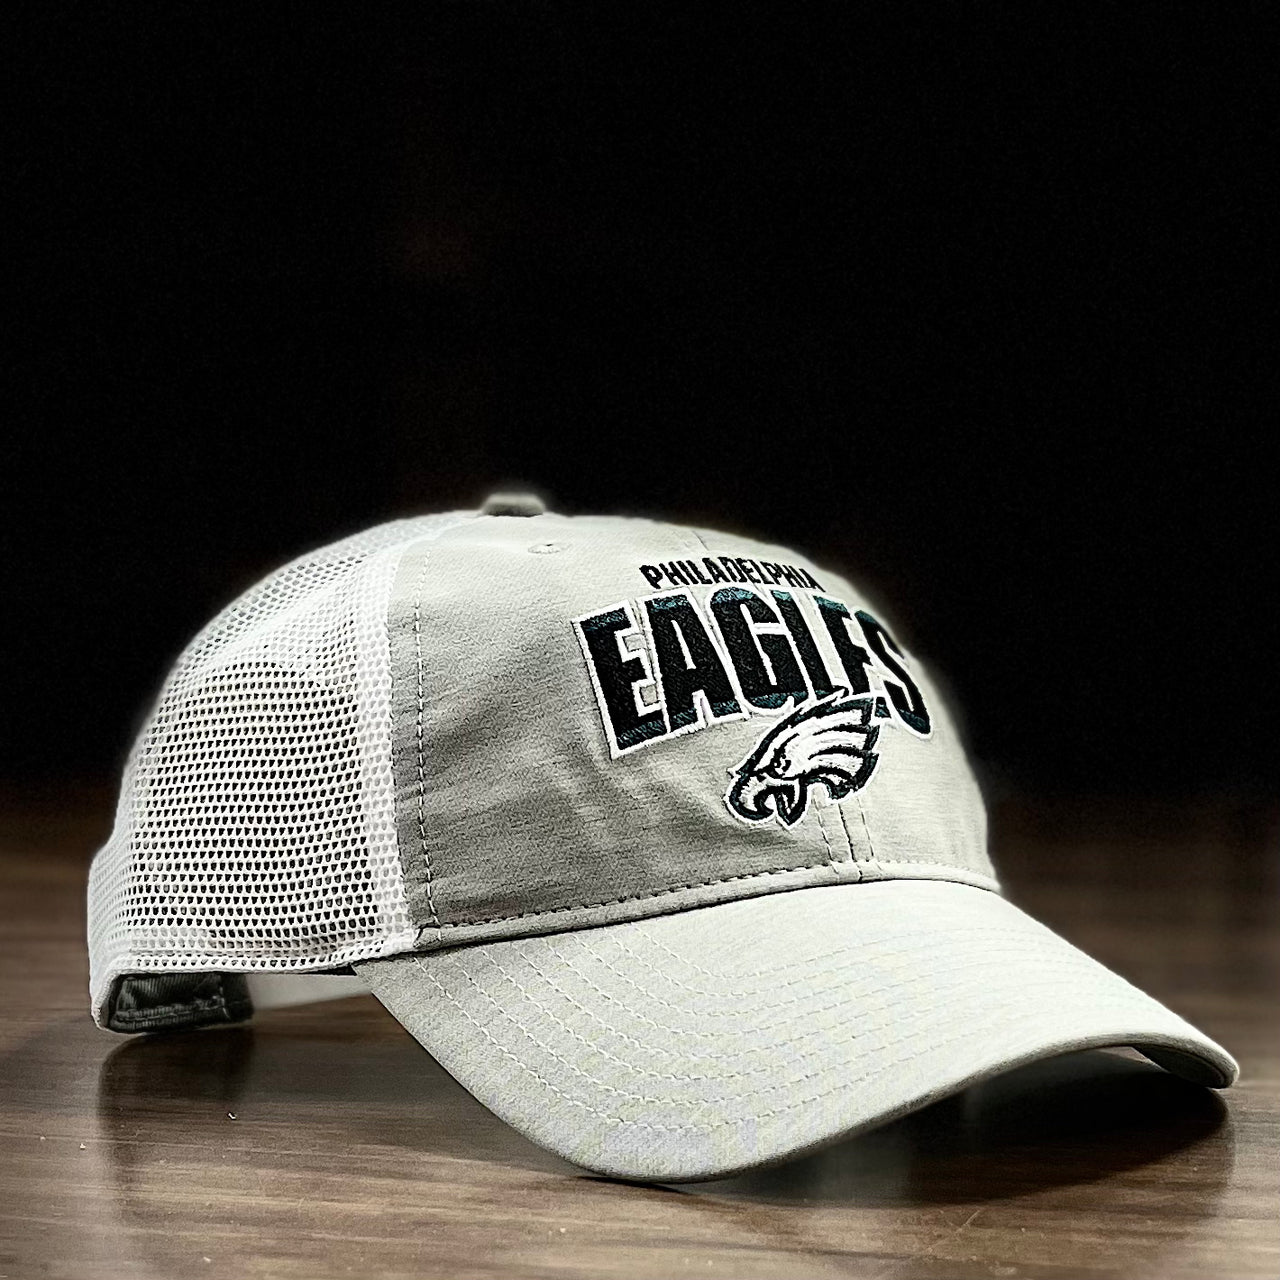 Philadelphia Eagles Trucker Snapback Hat - Heather Gray/White - Dynasty Sports & Framing 